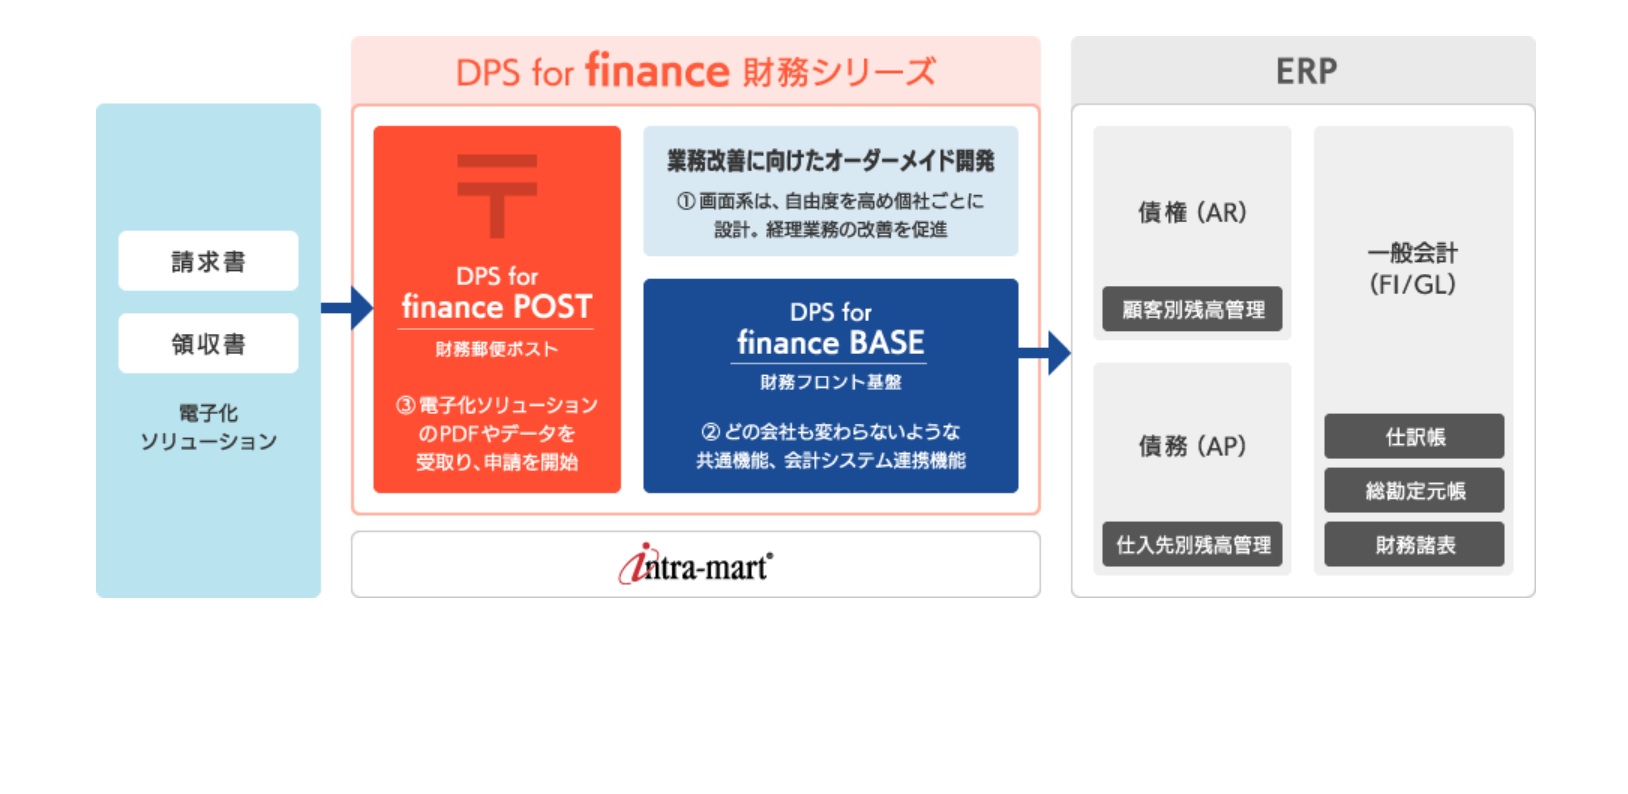 ../../_images/DPS_for_finance.jpg